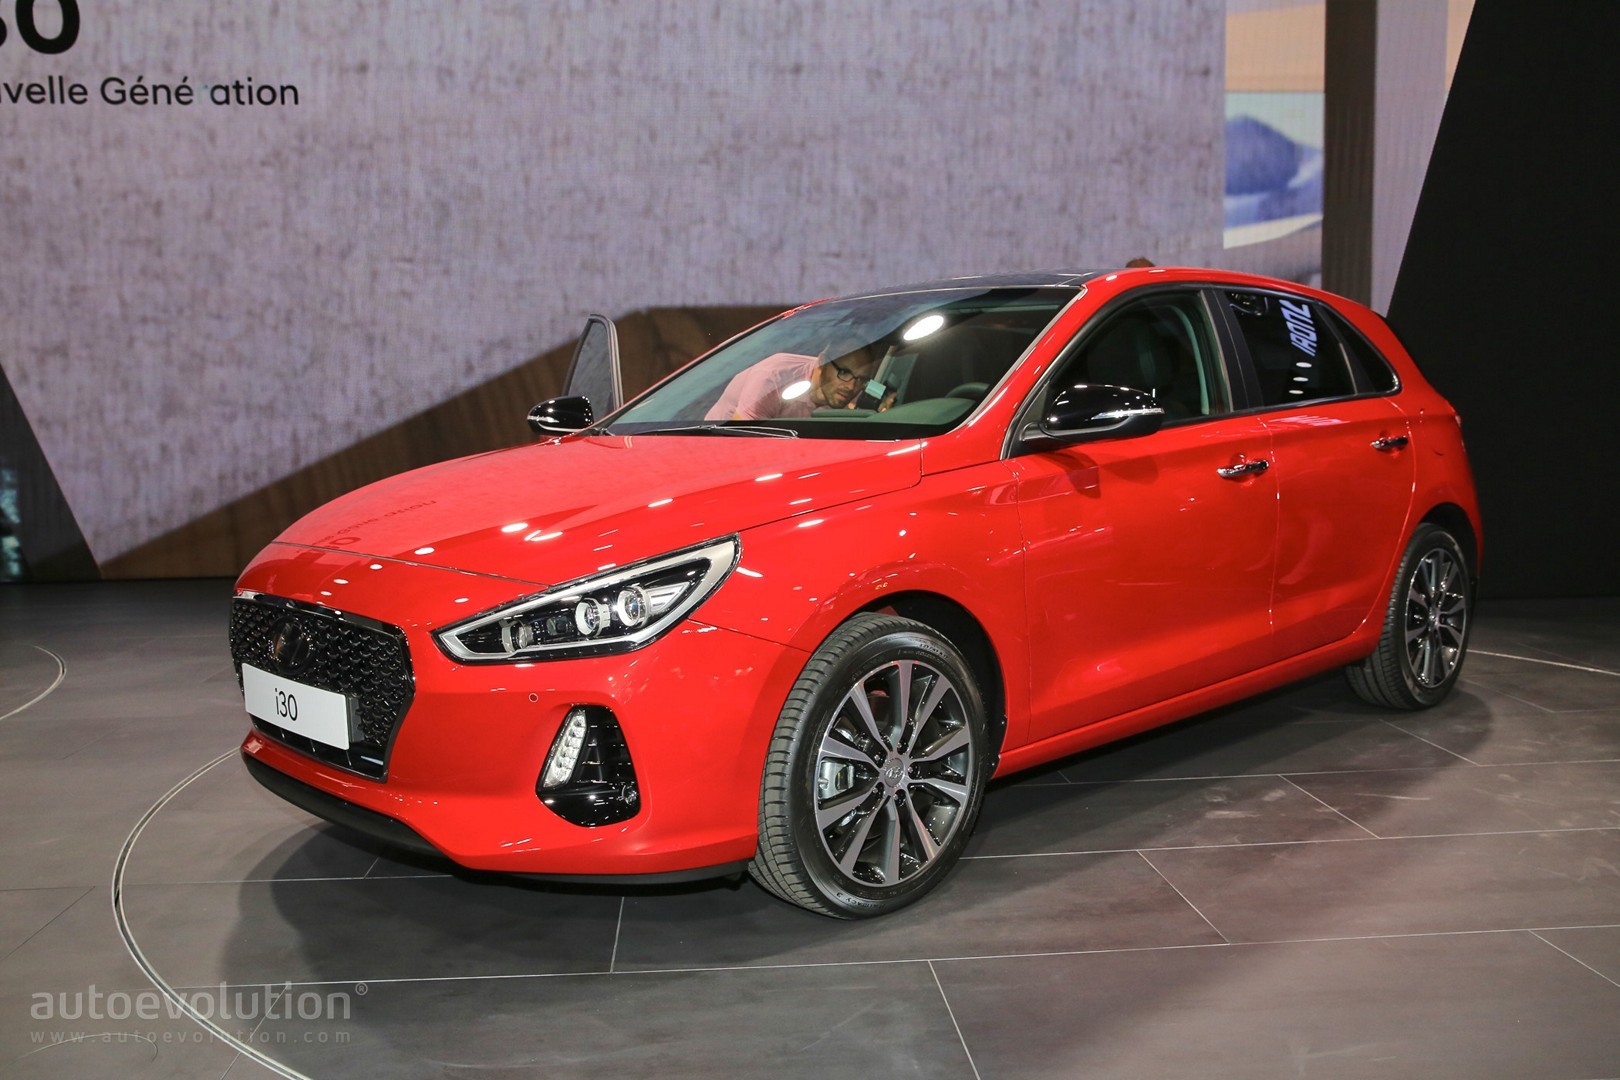 2018 Hyundai Elantra Is American - autoevolution